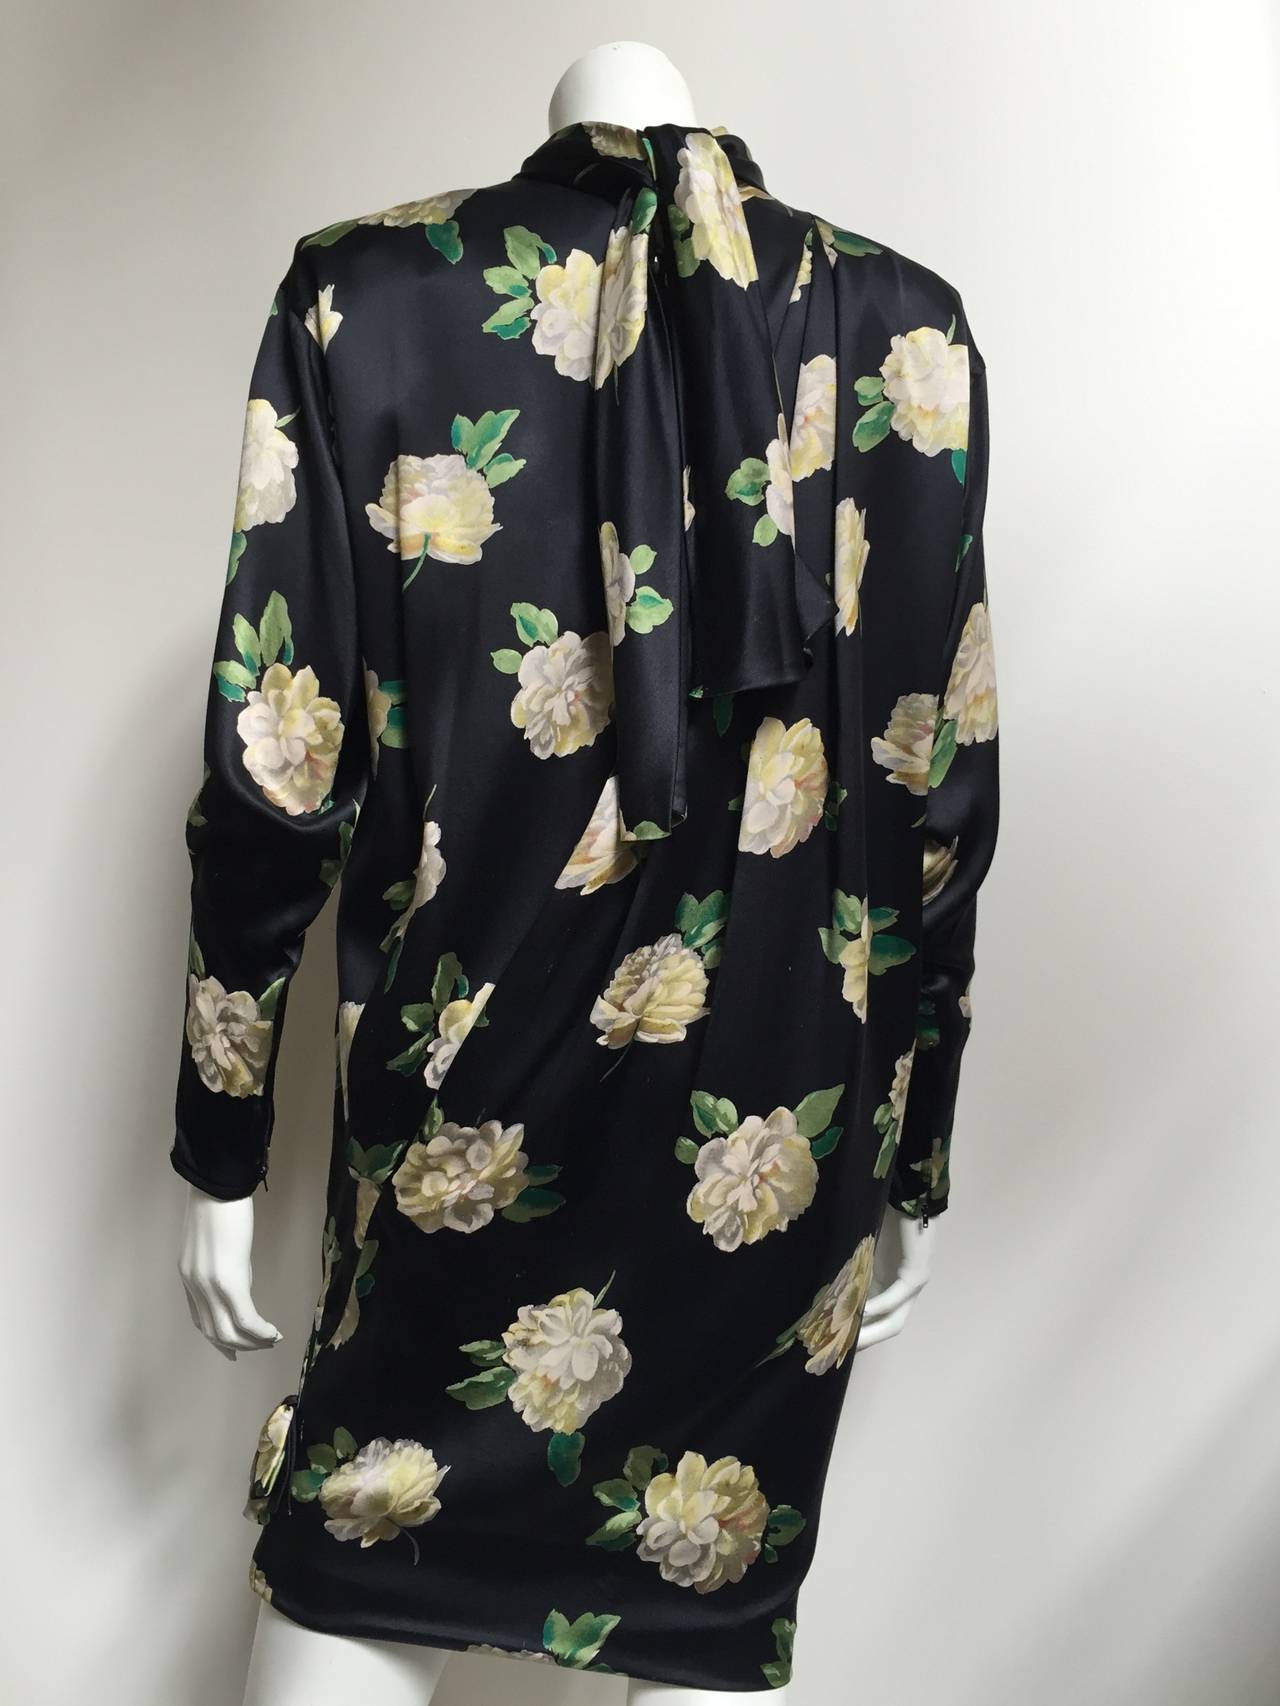 Women's Ungaro Parallele Paris 80s silk camellia dress size 6 / 8.